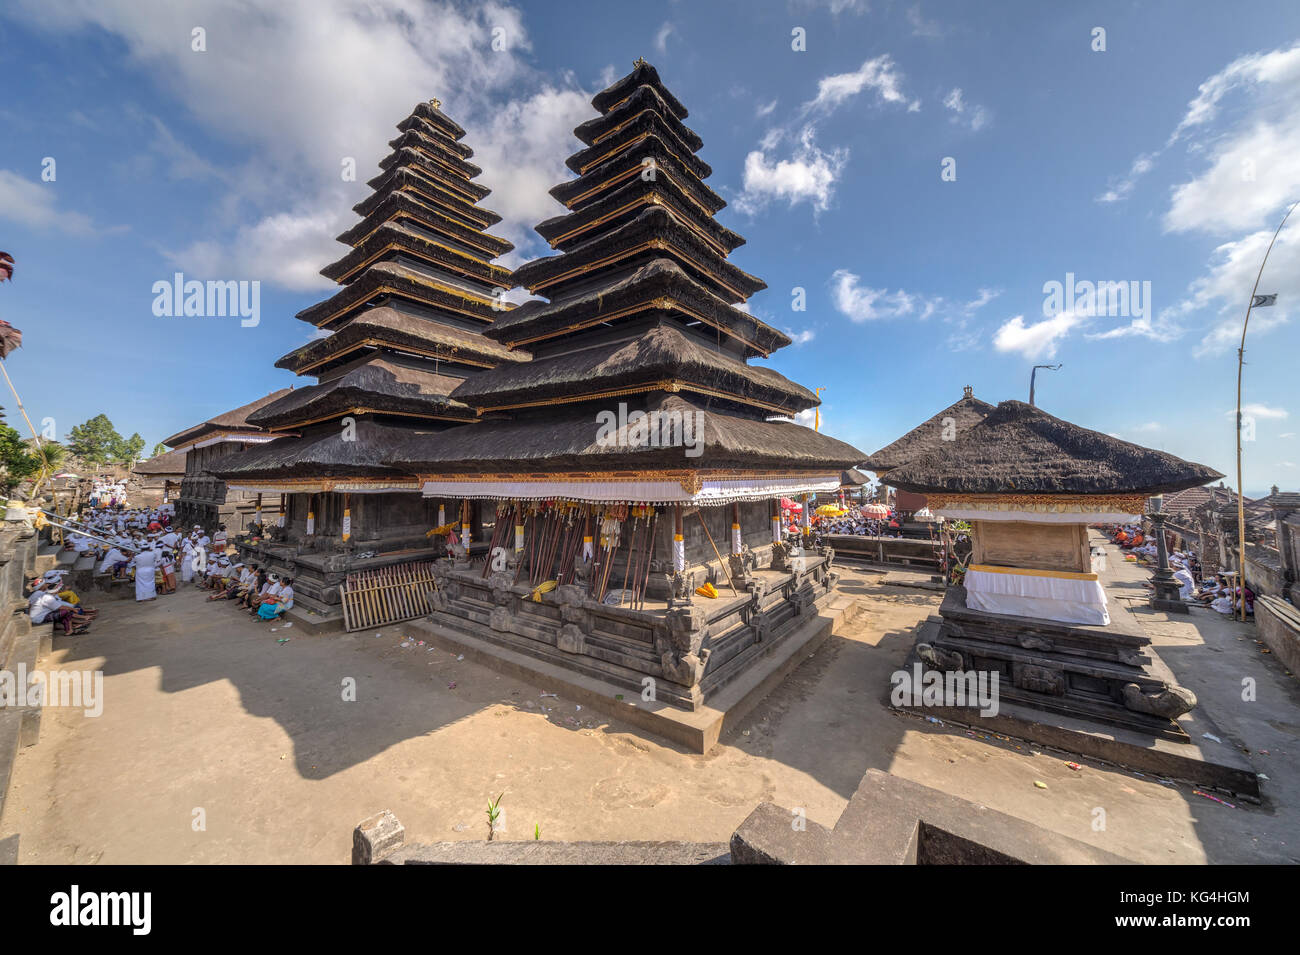 Wooden pagoda roofs of Pura Besakih Balinese temple Stock Photo